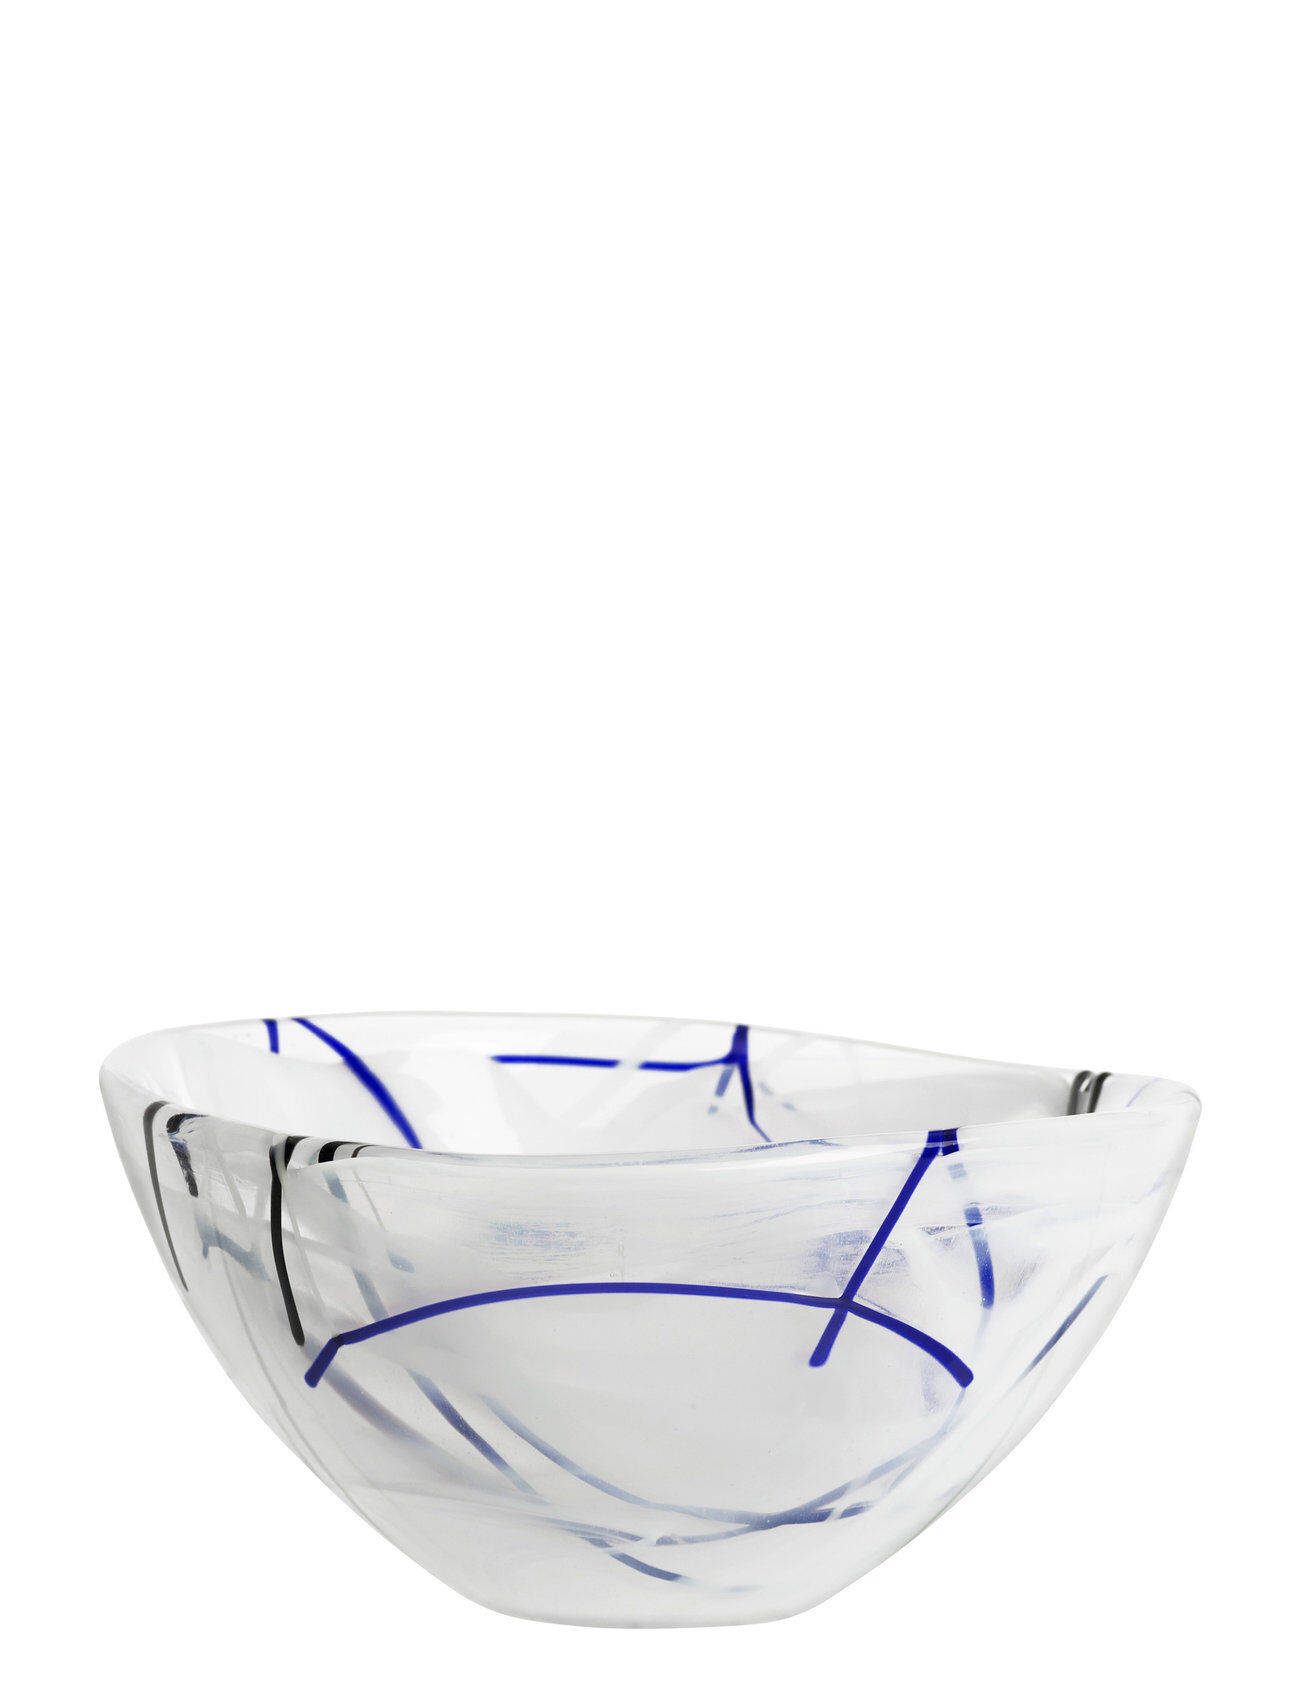 Kosta Boda Contrast White Bowl D 160Mm Home Tableware Bowls Breakfast Bowls Hvit Kosta Boda